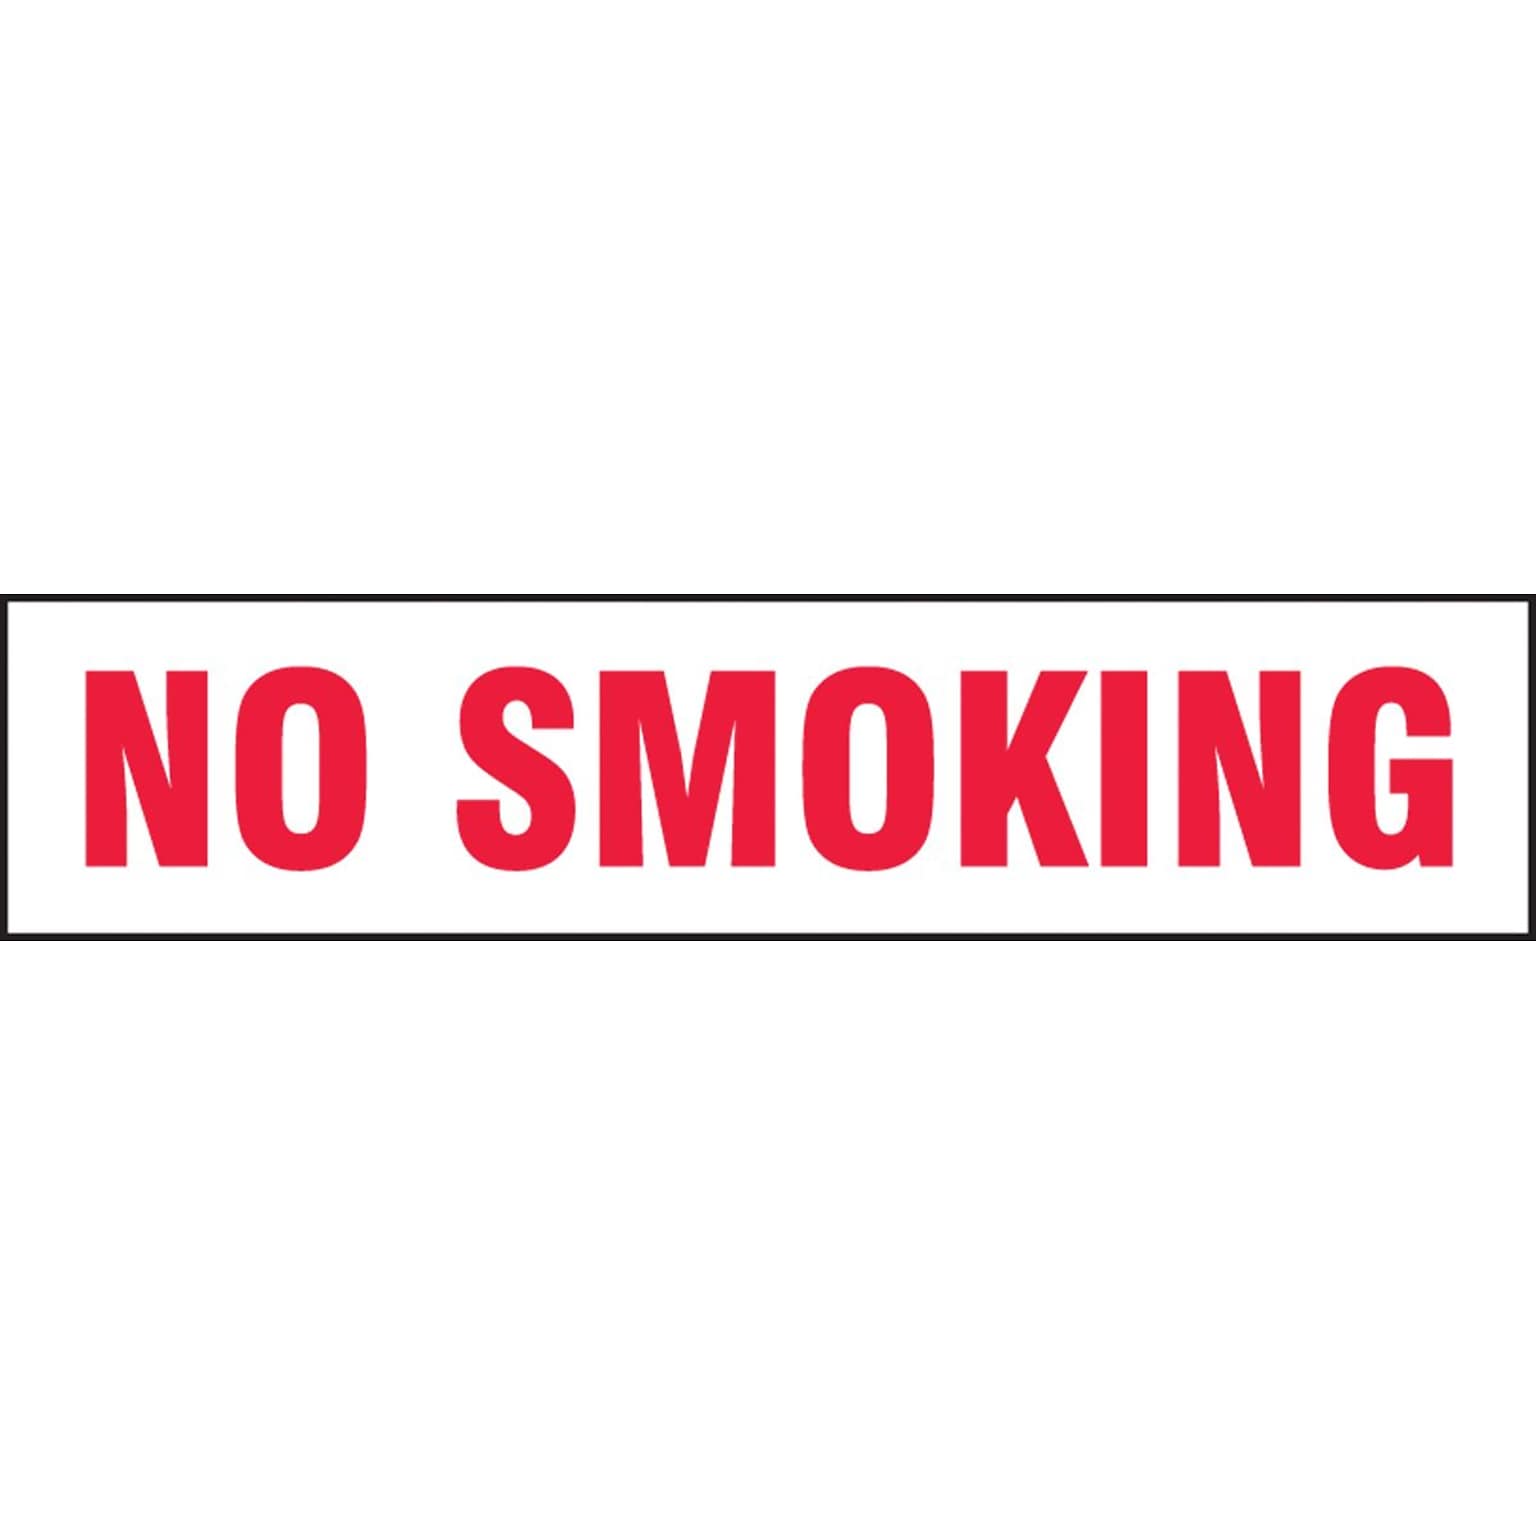 Accuform Safety Label, NO SMOKING, 2 x 9, Adhesive Vinyl, 5/Pack (LSMK540VSP)